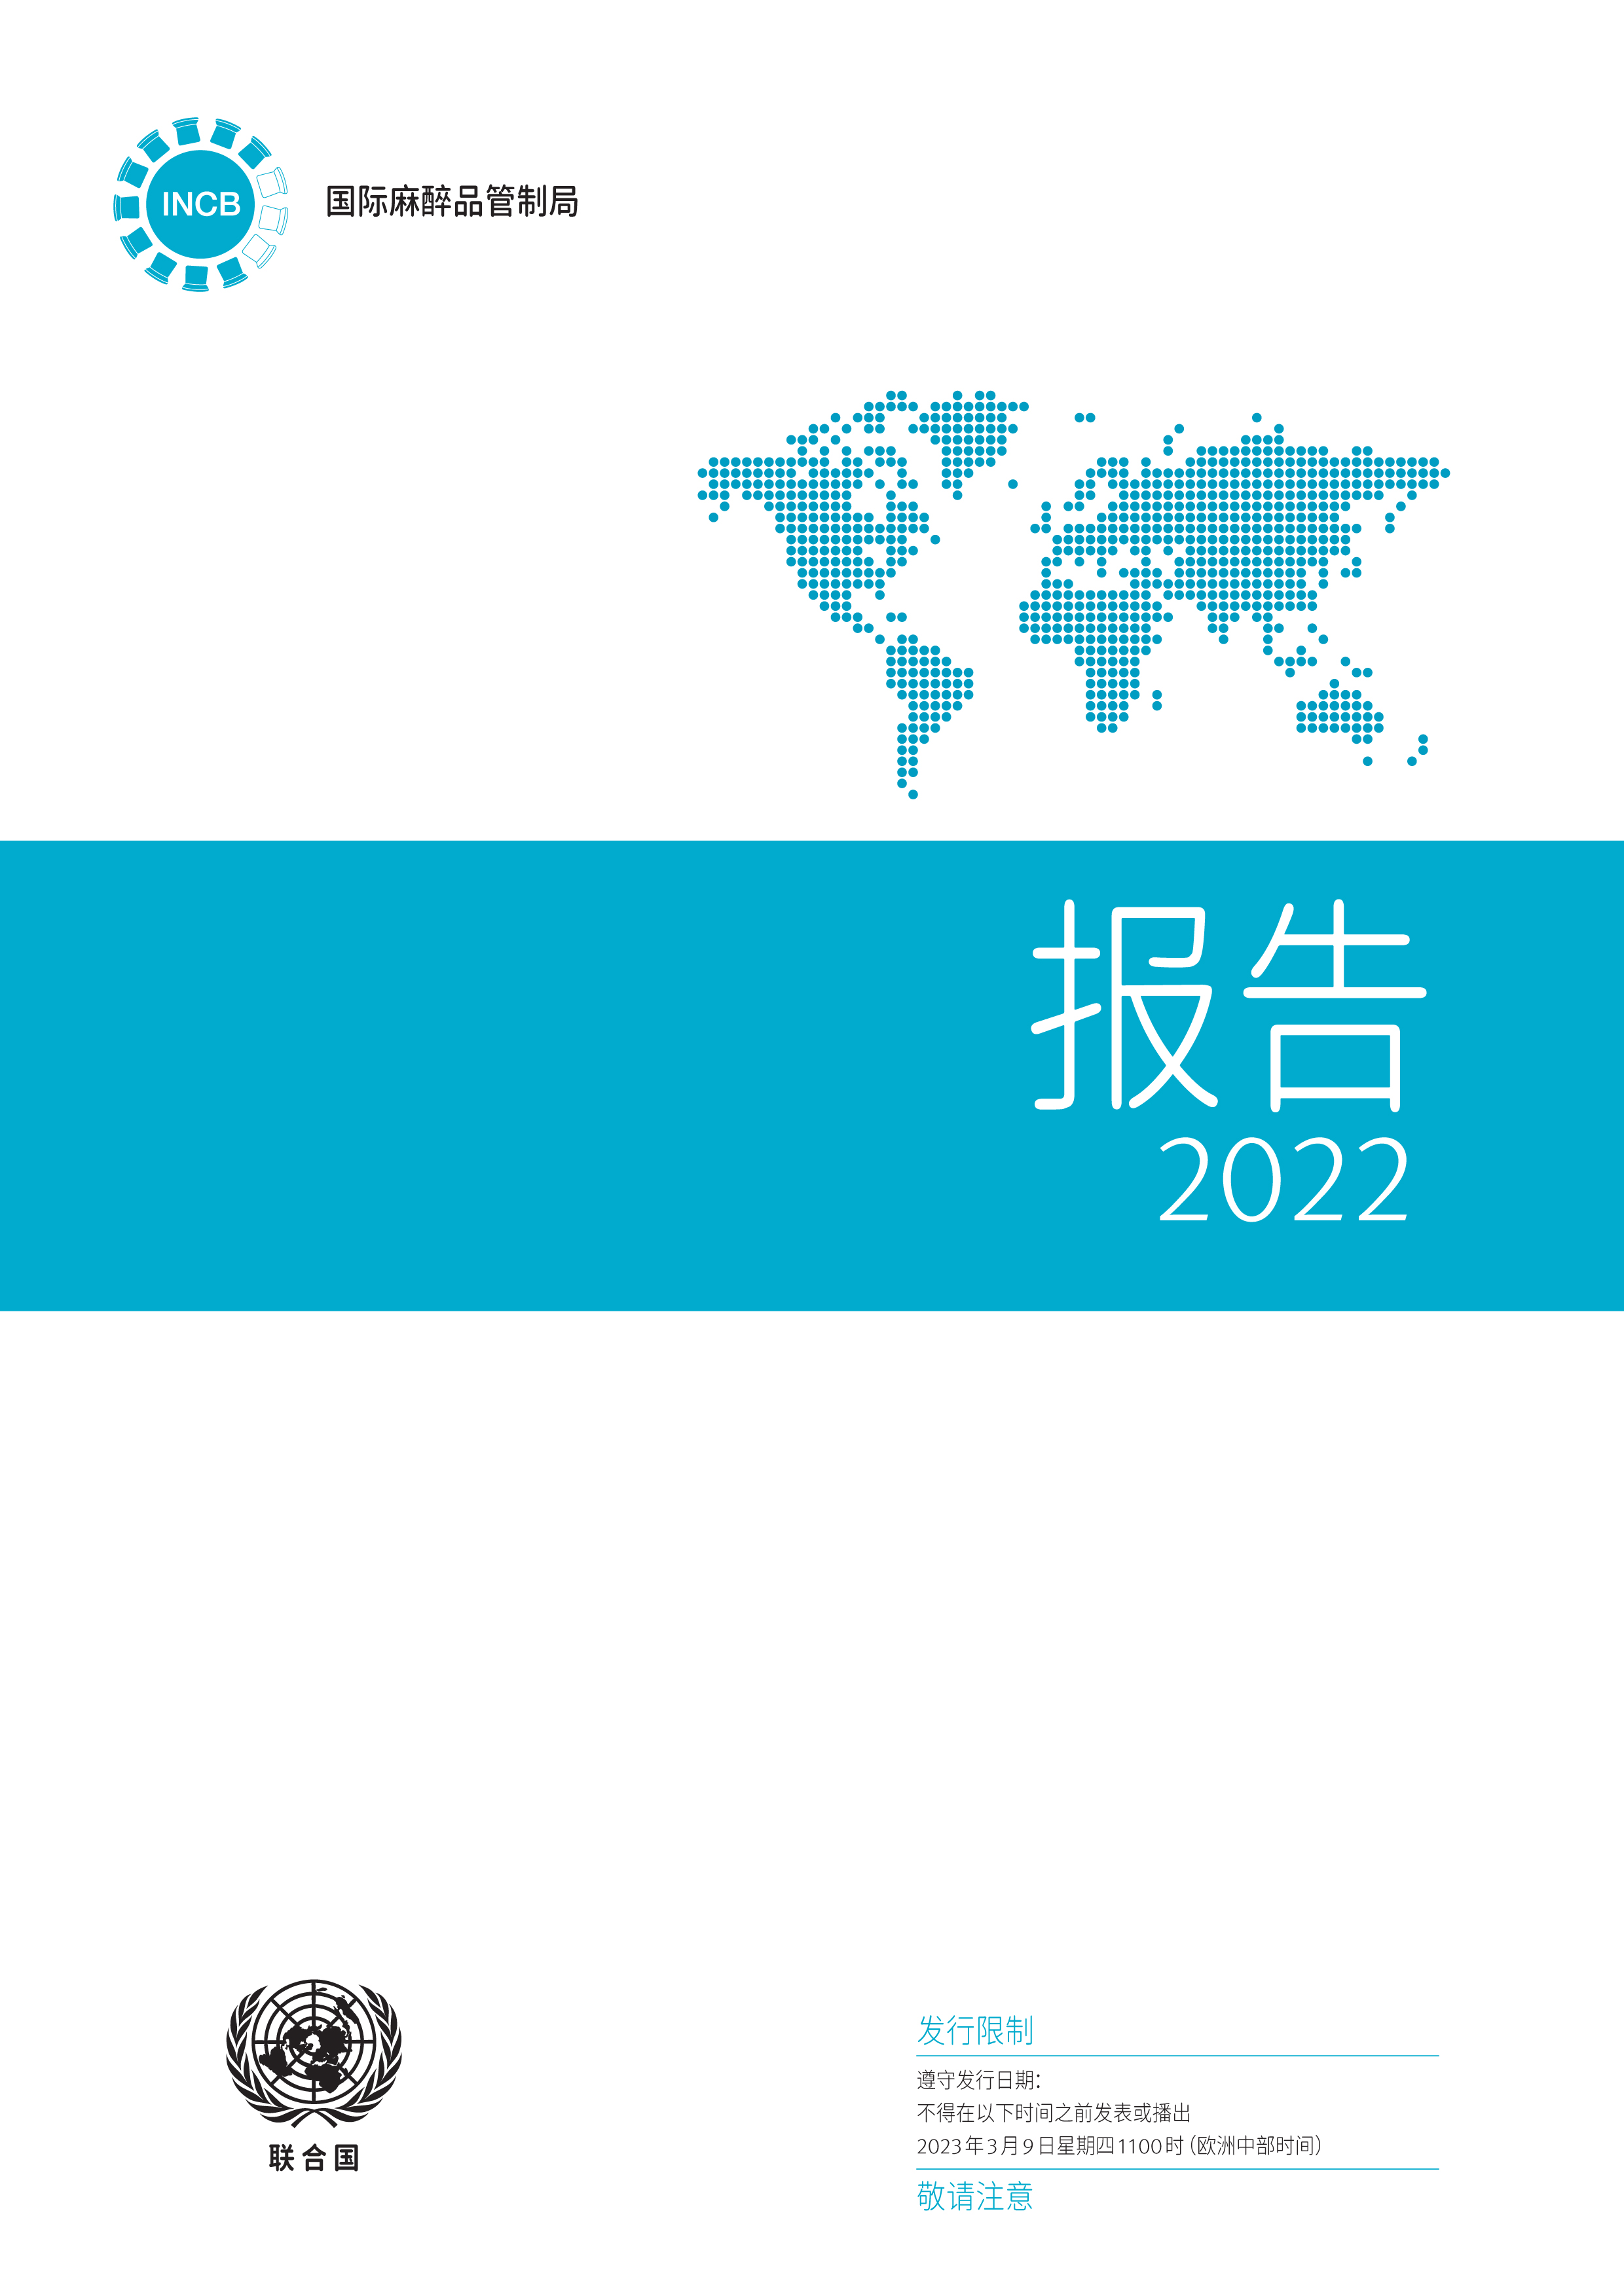 image of 2022年国际麻醉品管制局报告